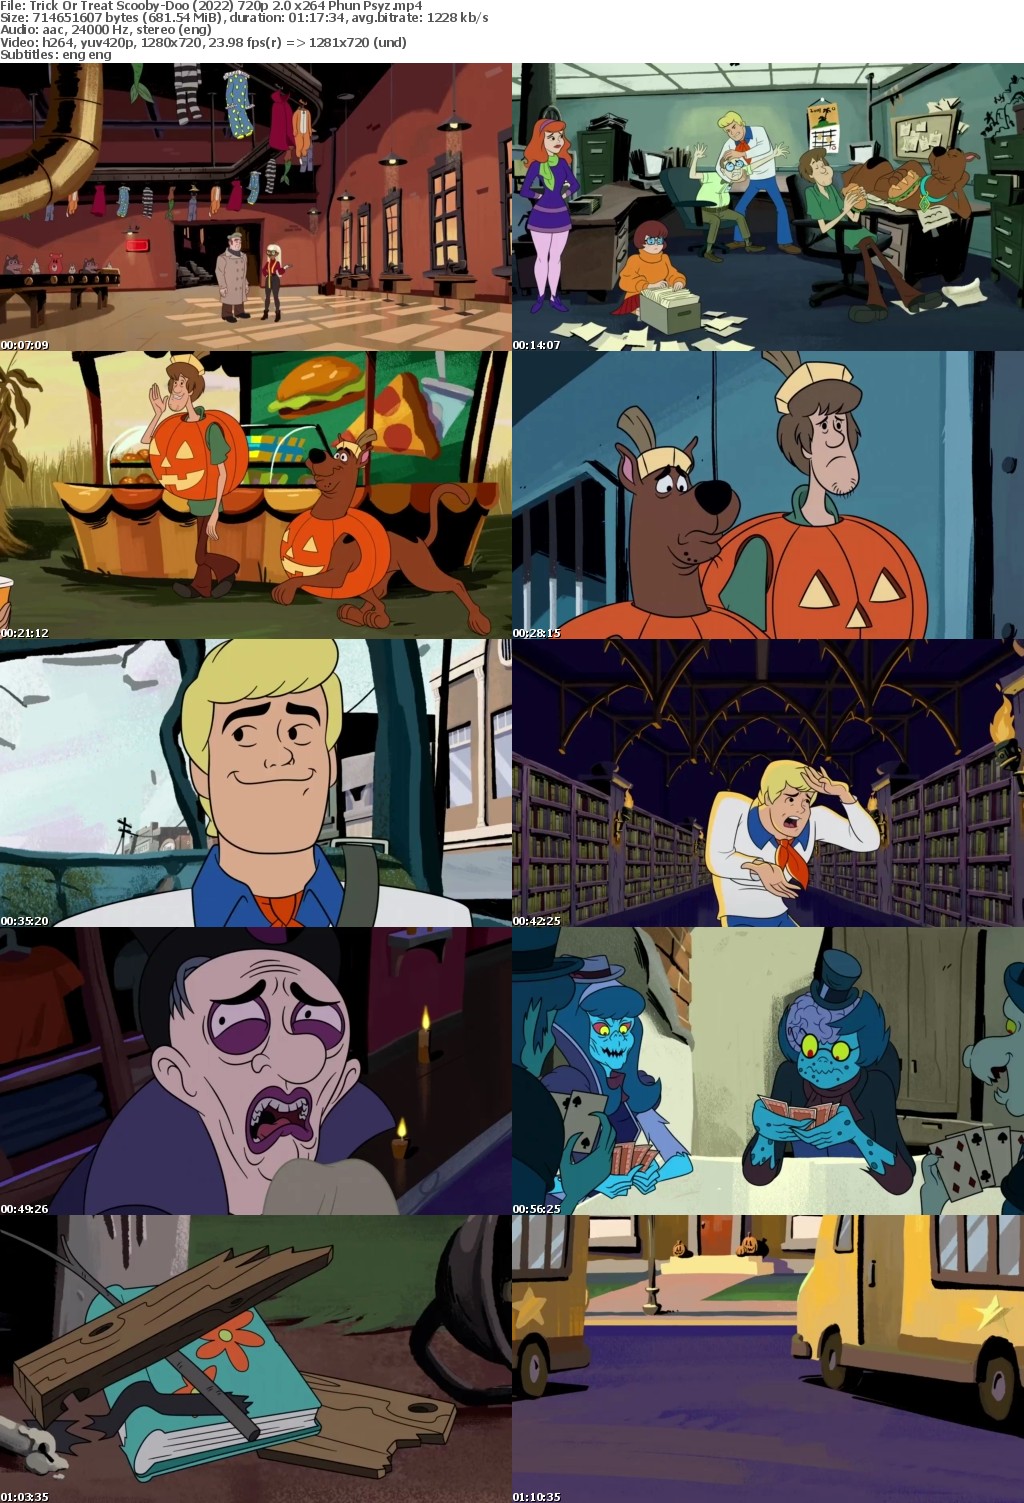 Trick Or Treat Scooby-Doo (2022) 720p 2 0 x264 Phun Psyz